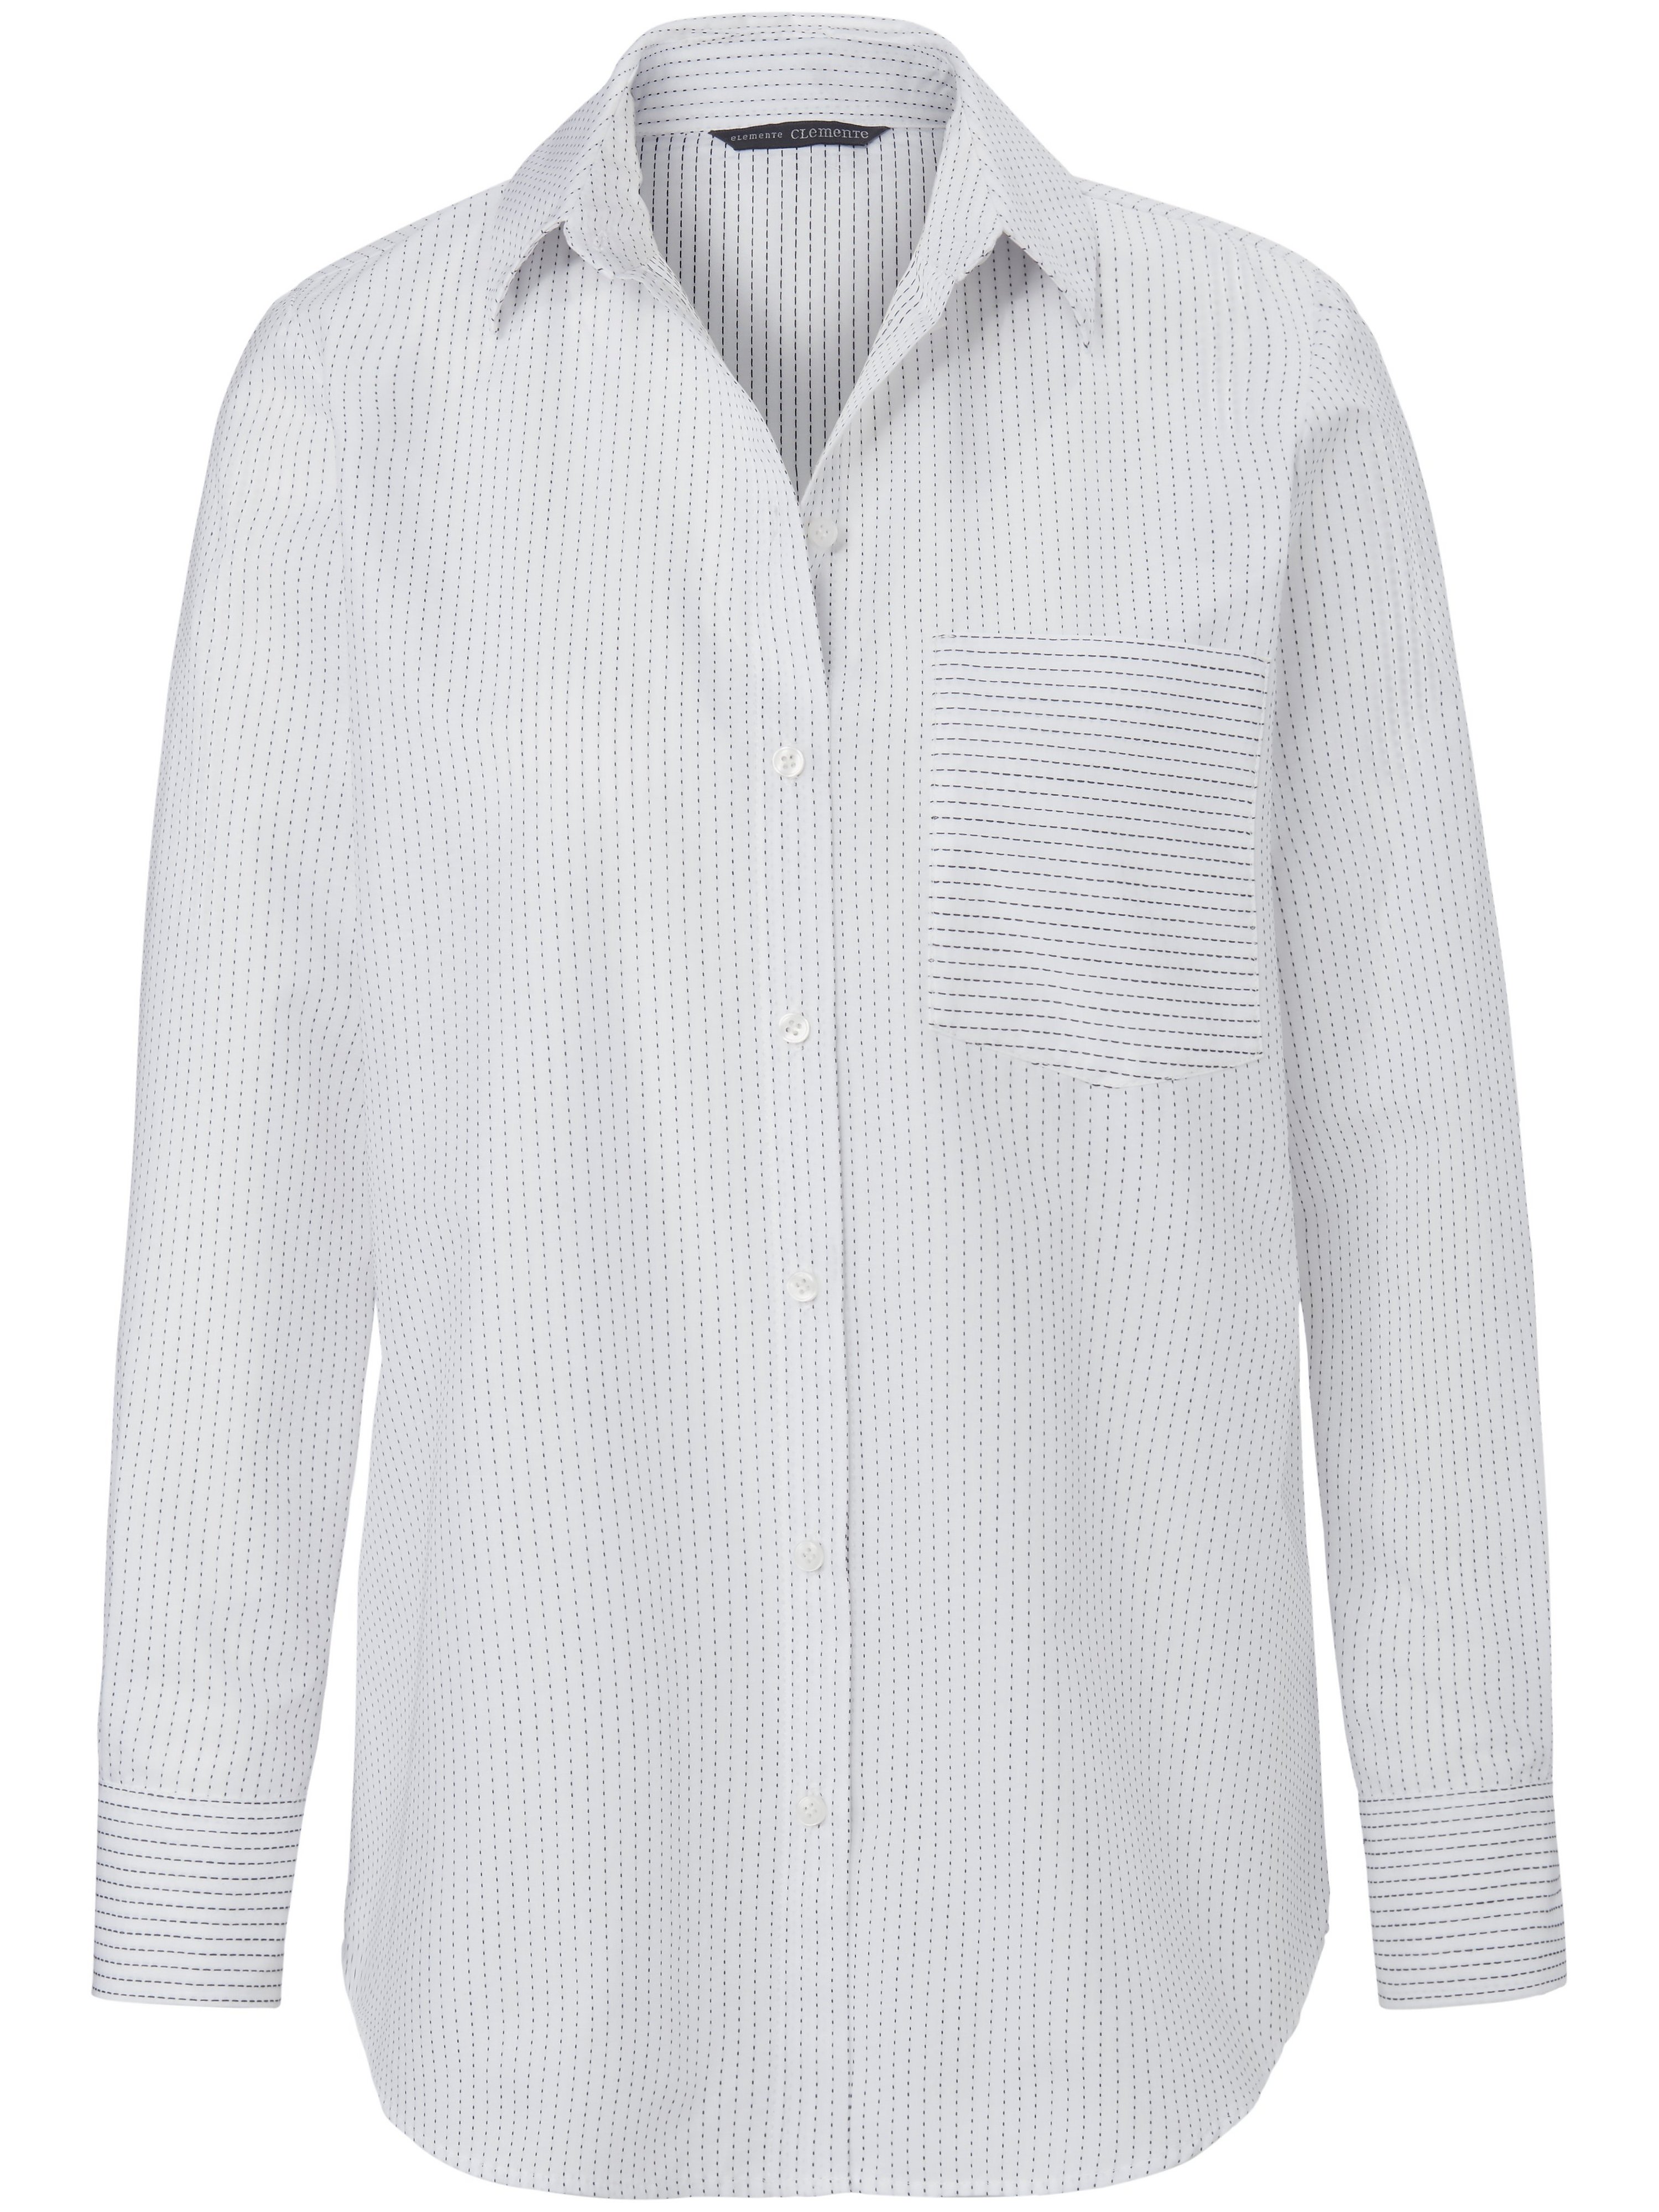 Lange blouse 100% katoen Van elemente clemente wit